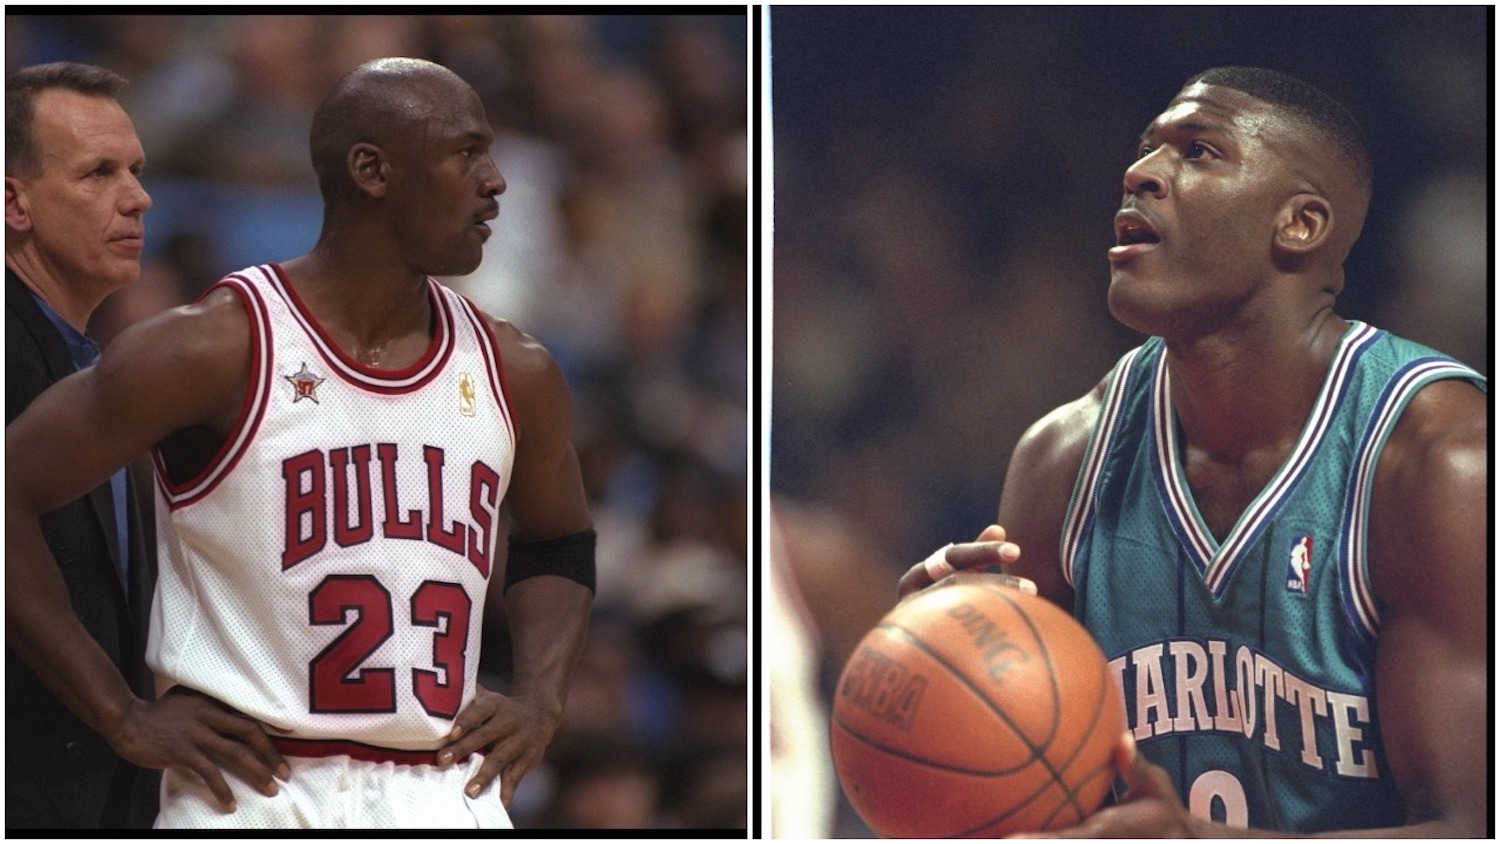 Michael Jordan (L) and Larry Johnson (R) during NBA action.